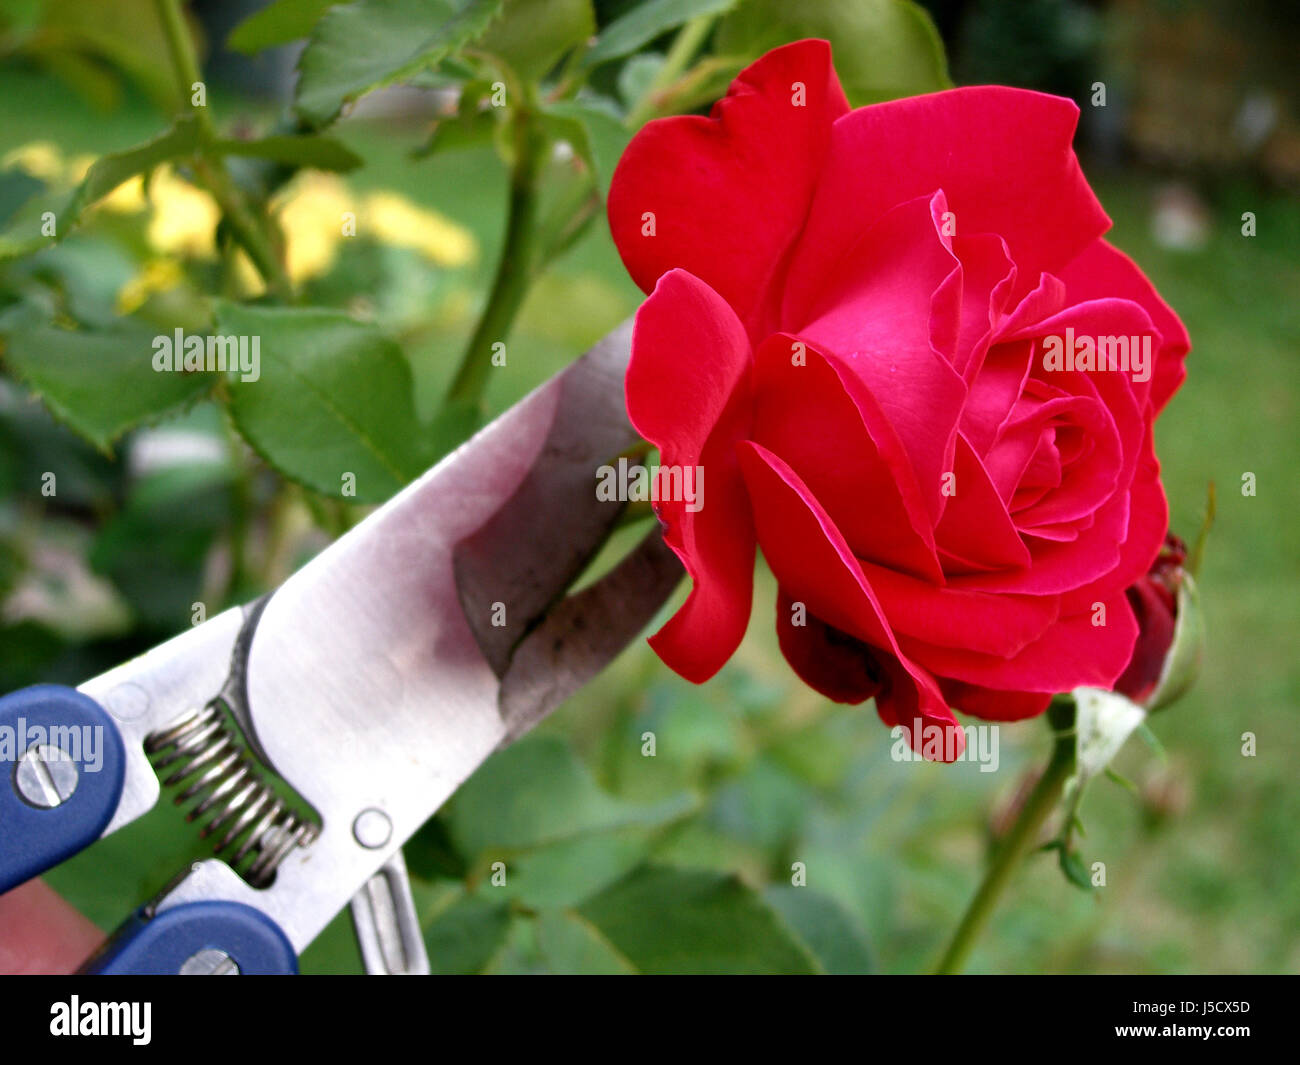 flower rose plant gardener gardening market-garden cut back secateurs secateur Stock Photo